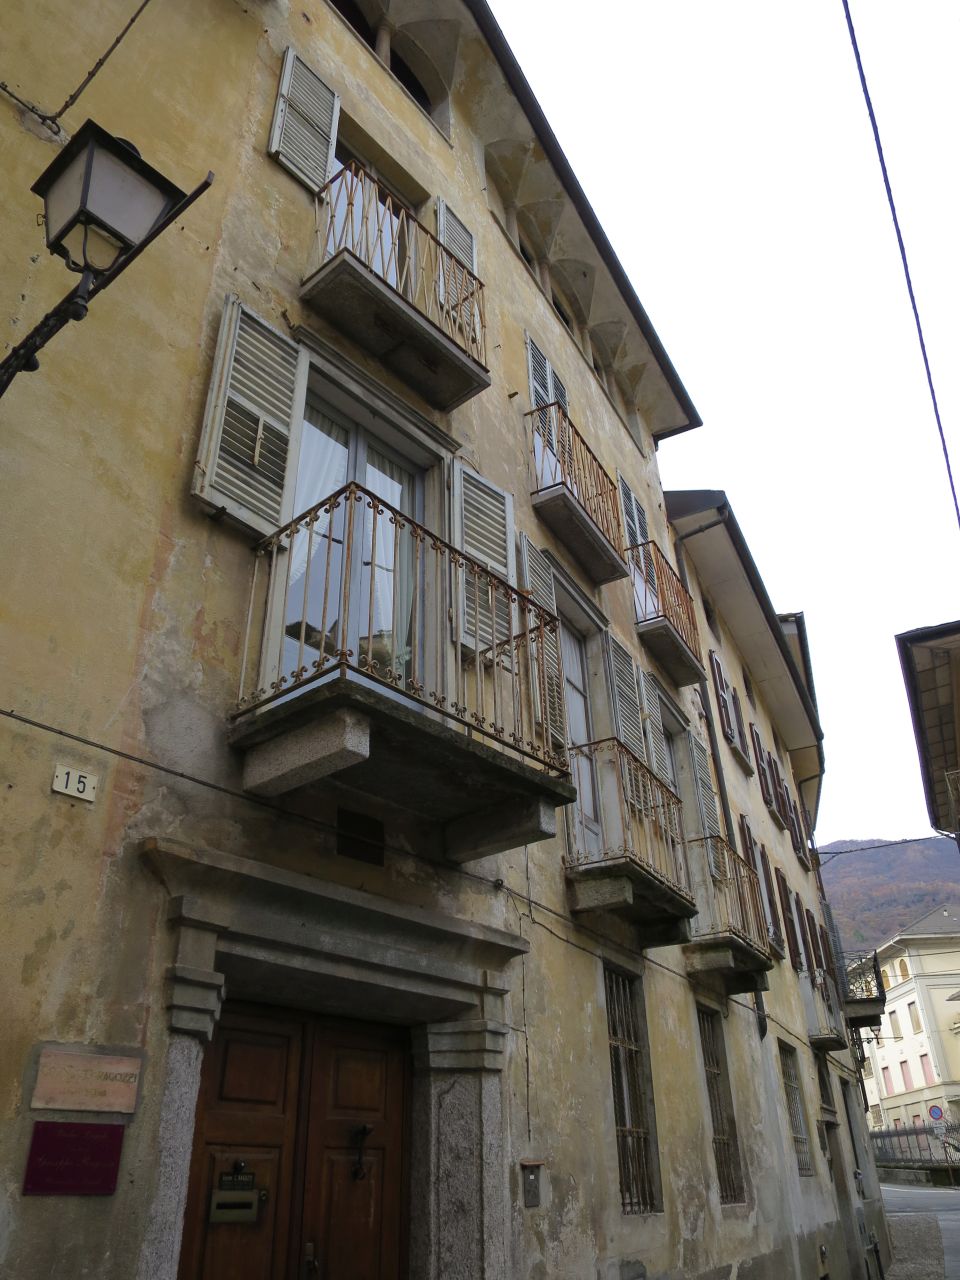 Palazzotto residenziale detto casa Valseur (palazzo, residenziale) - Varallo (VC) 